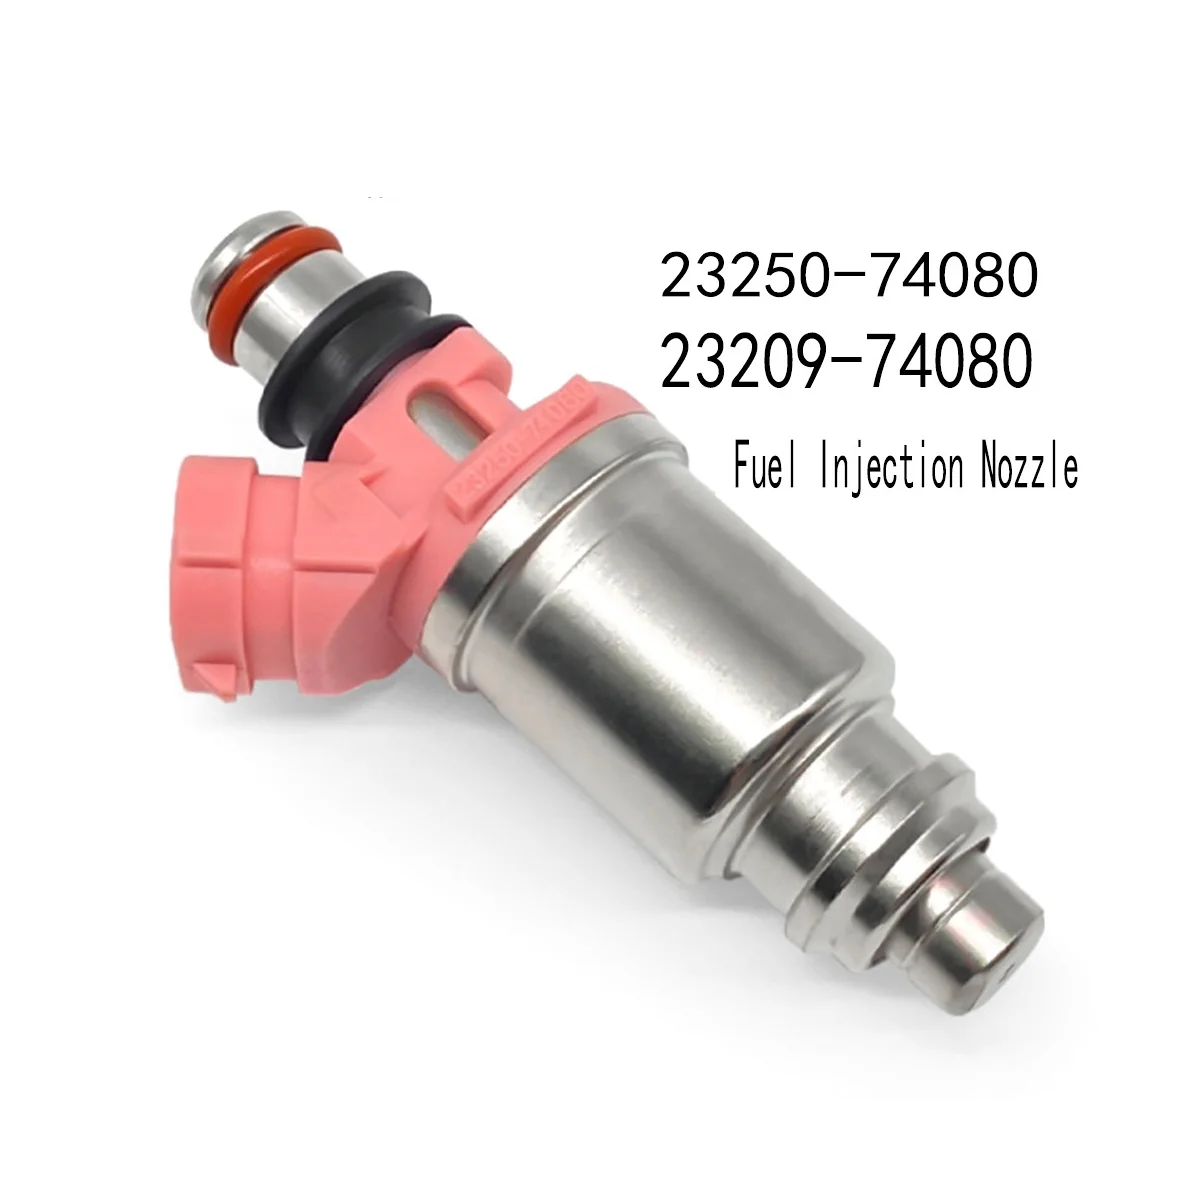 

6Pcs Fuel Injection Nozzle for Toyota Land Cruiser Lexus LX450 4.5L 1993-1997 23250-74080 23209-74080